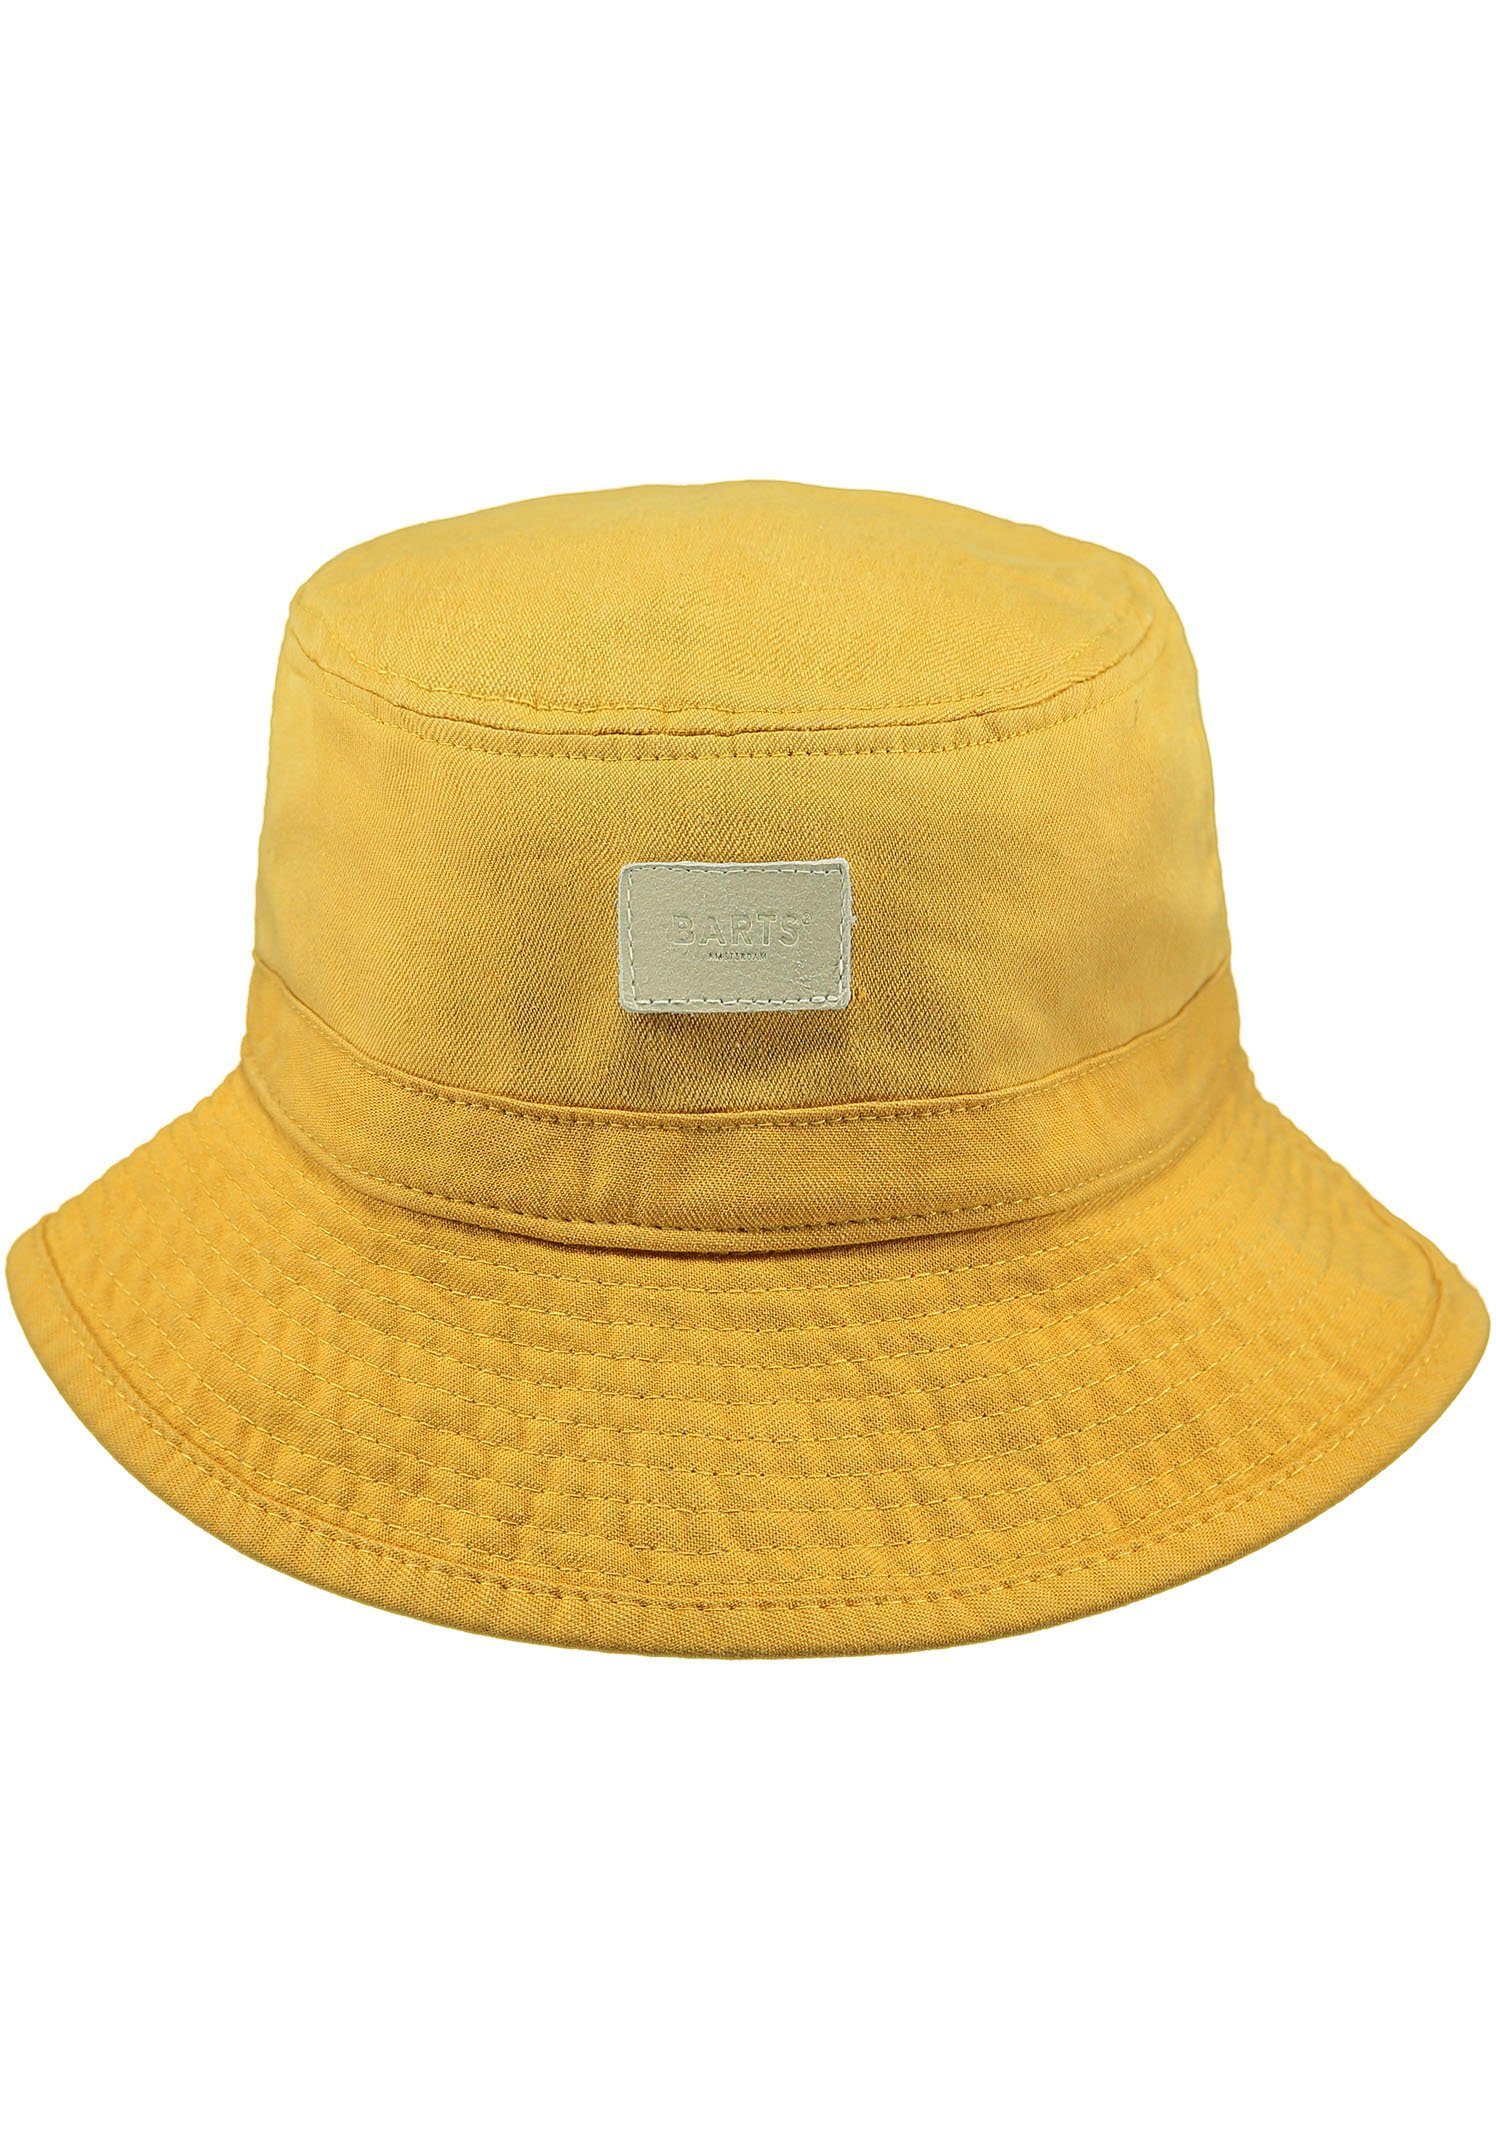 Barts Hat yellow Fischerhut Orohena